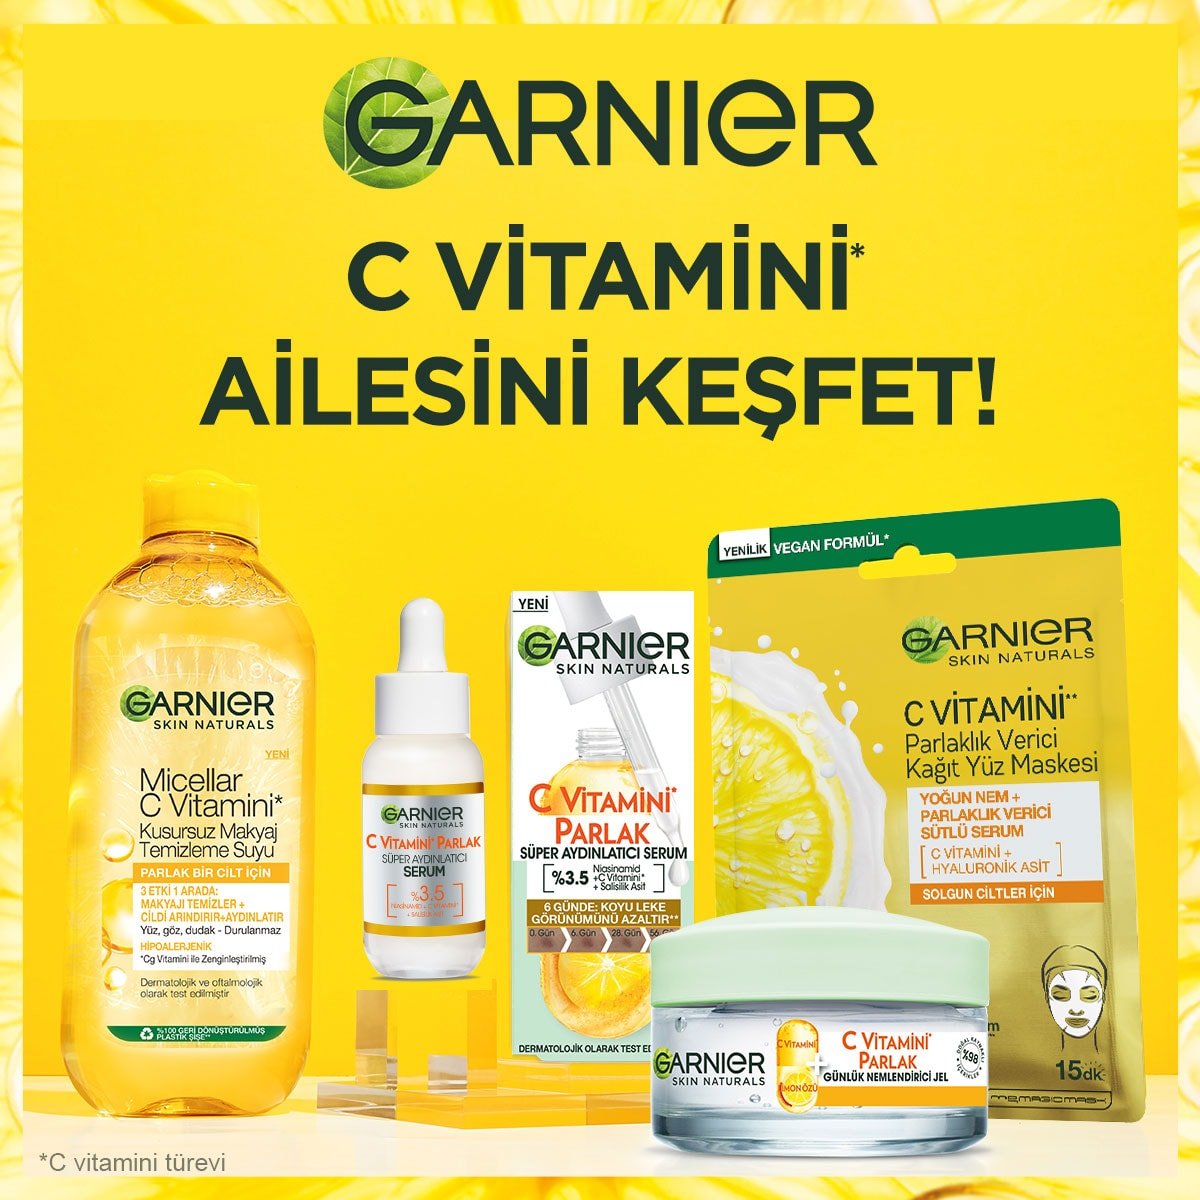 Garnier Micellar C Vitamini Kusursuz Makyaj Temizleme Suyu 4